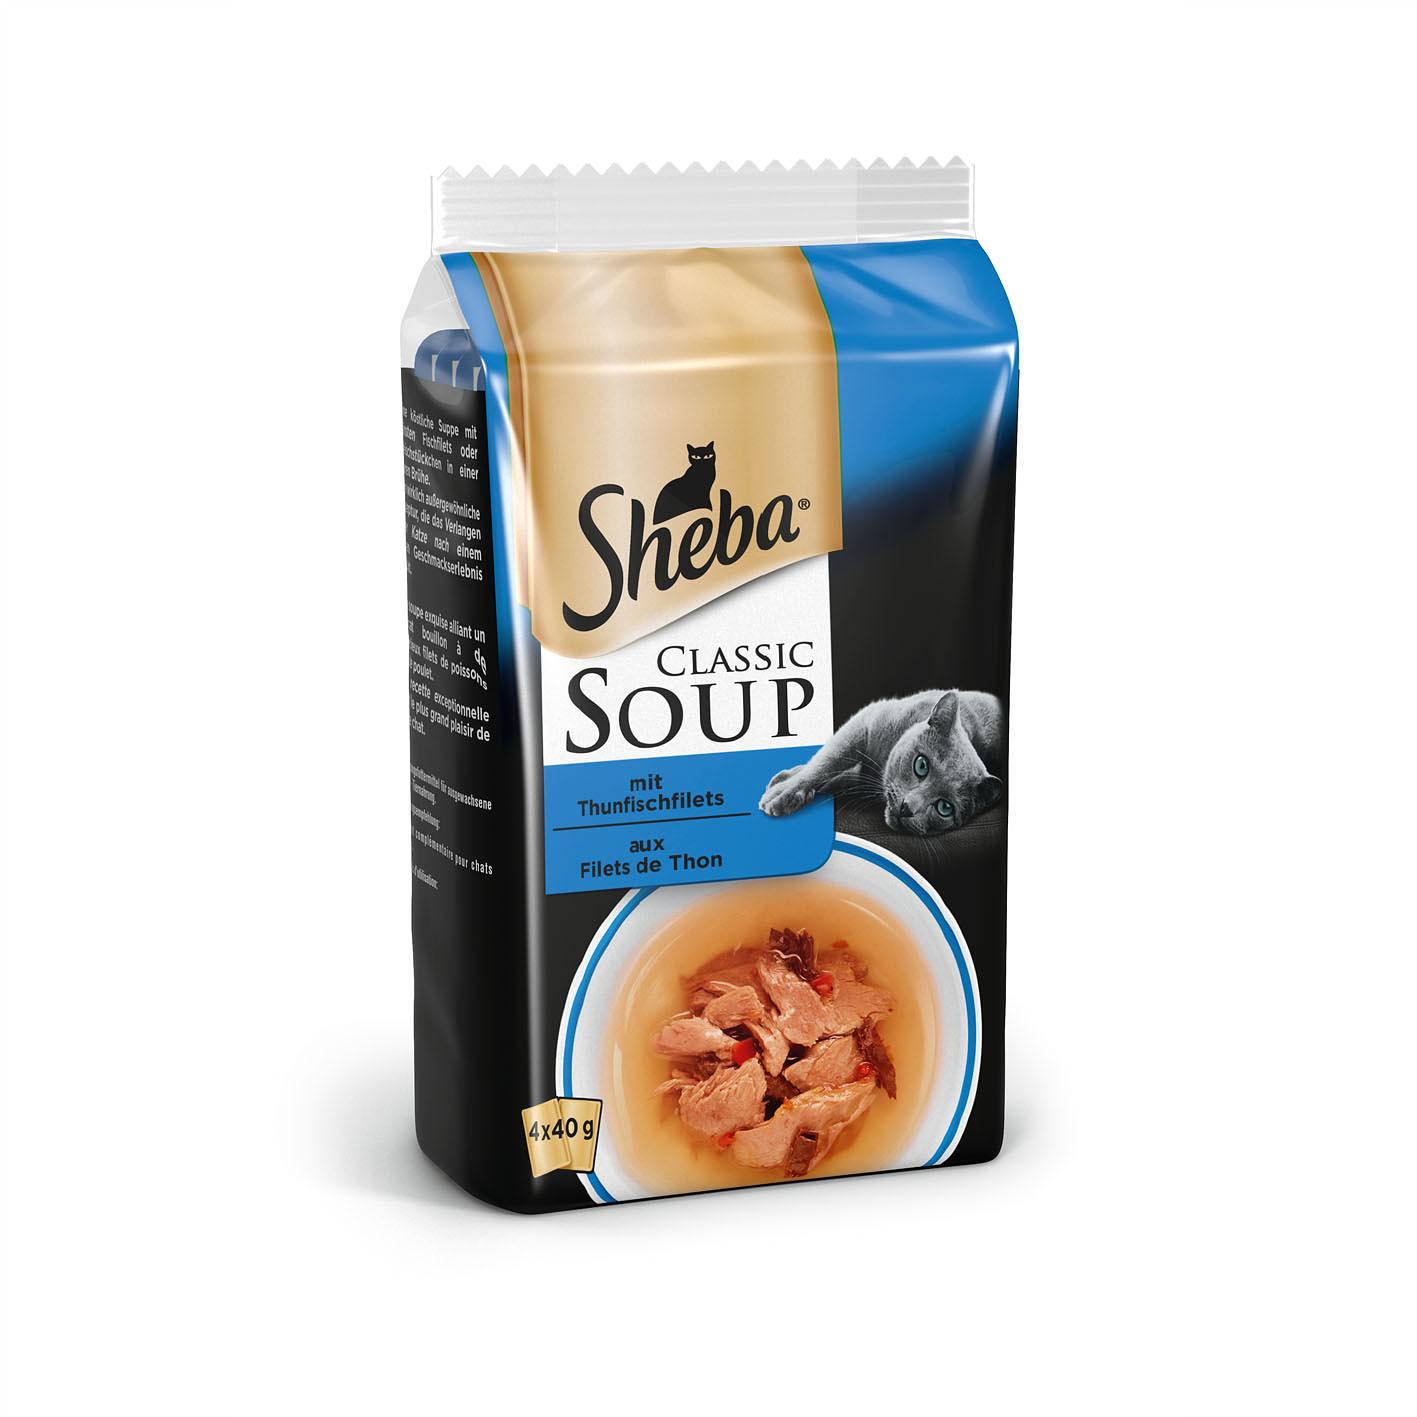 Sheba Classic Soup thon, 4x40g